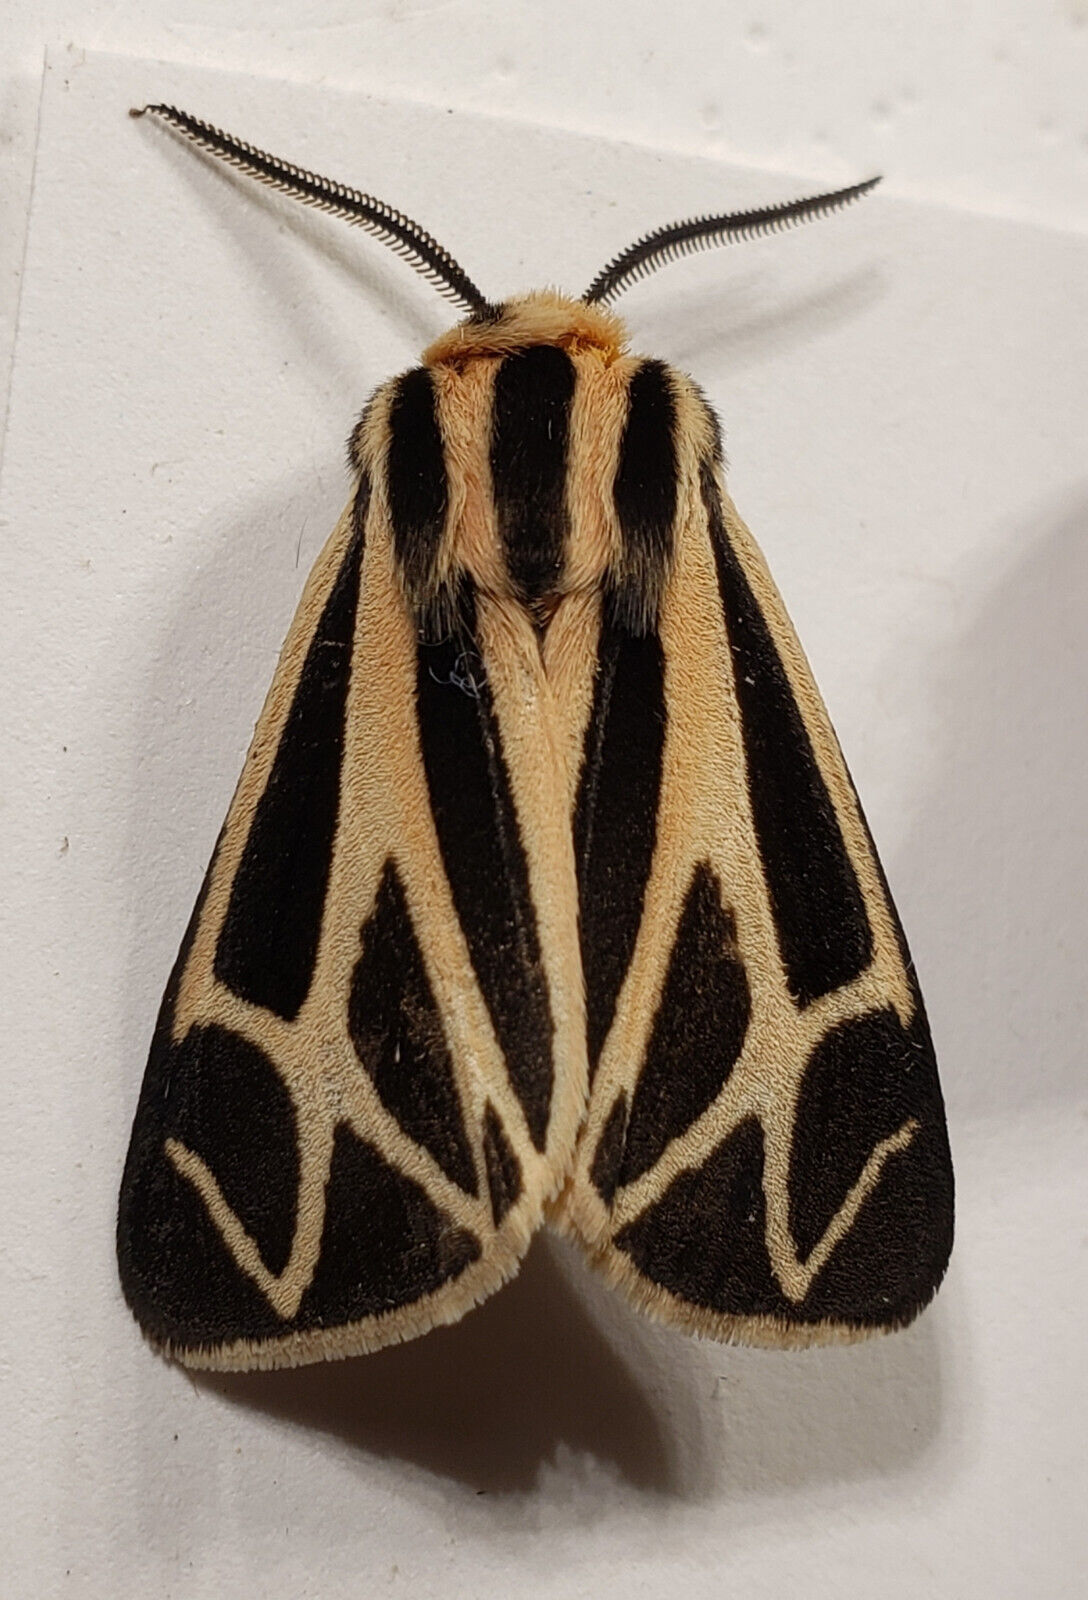 Tiger Moth: Apantesis sp  (Erebidae) USA Lepidoptera Insect